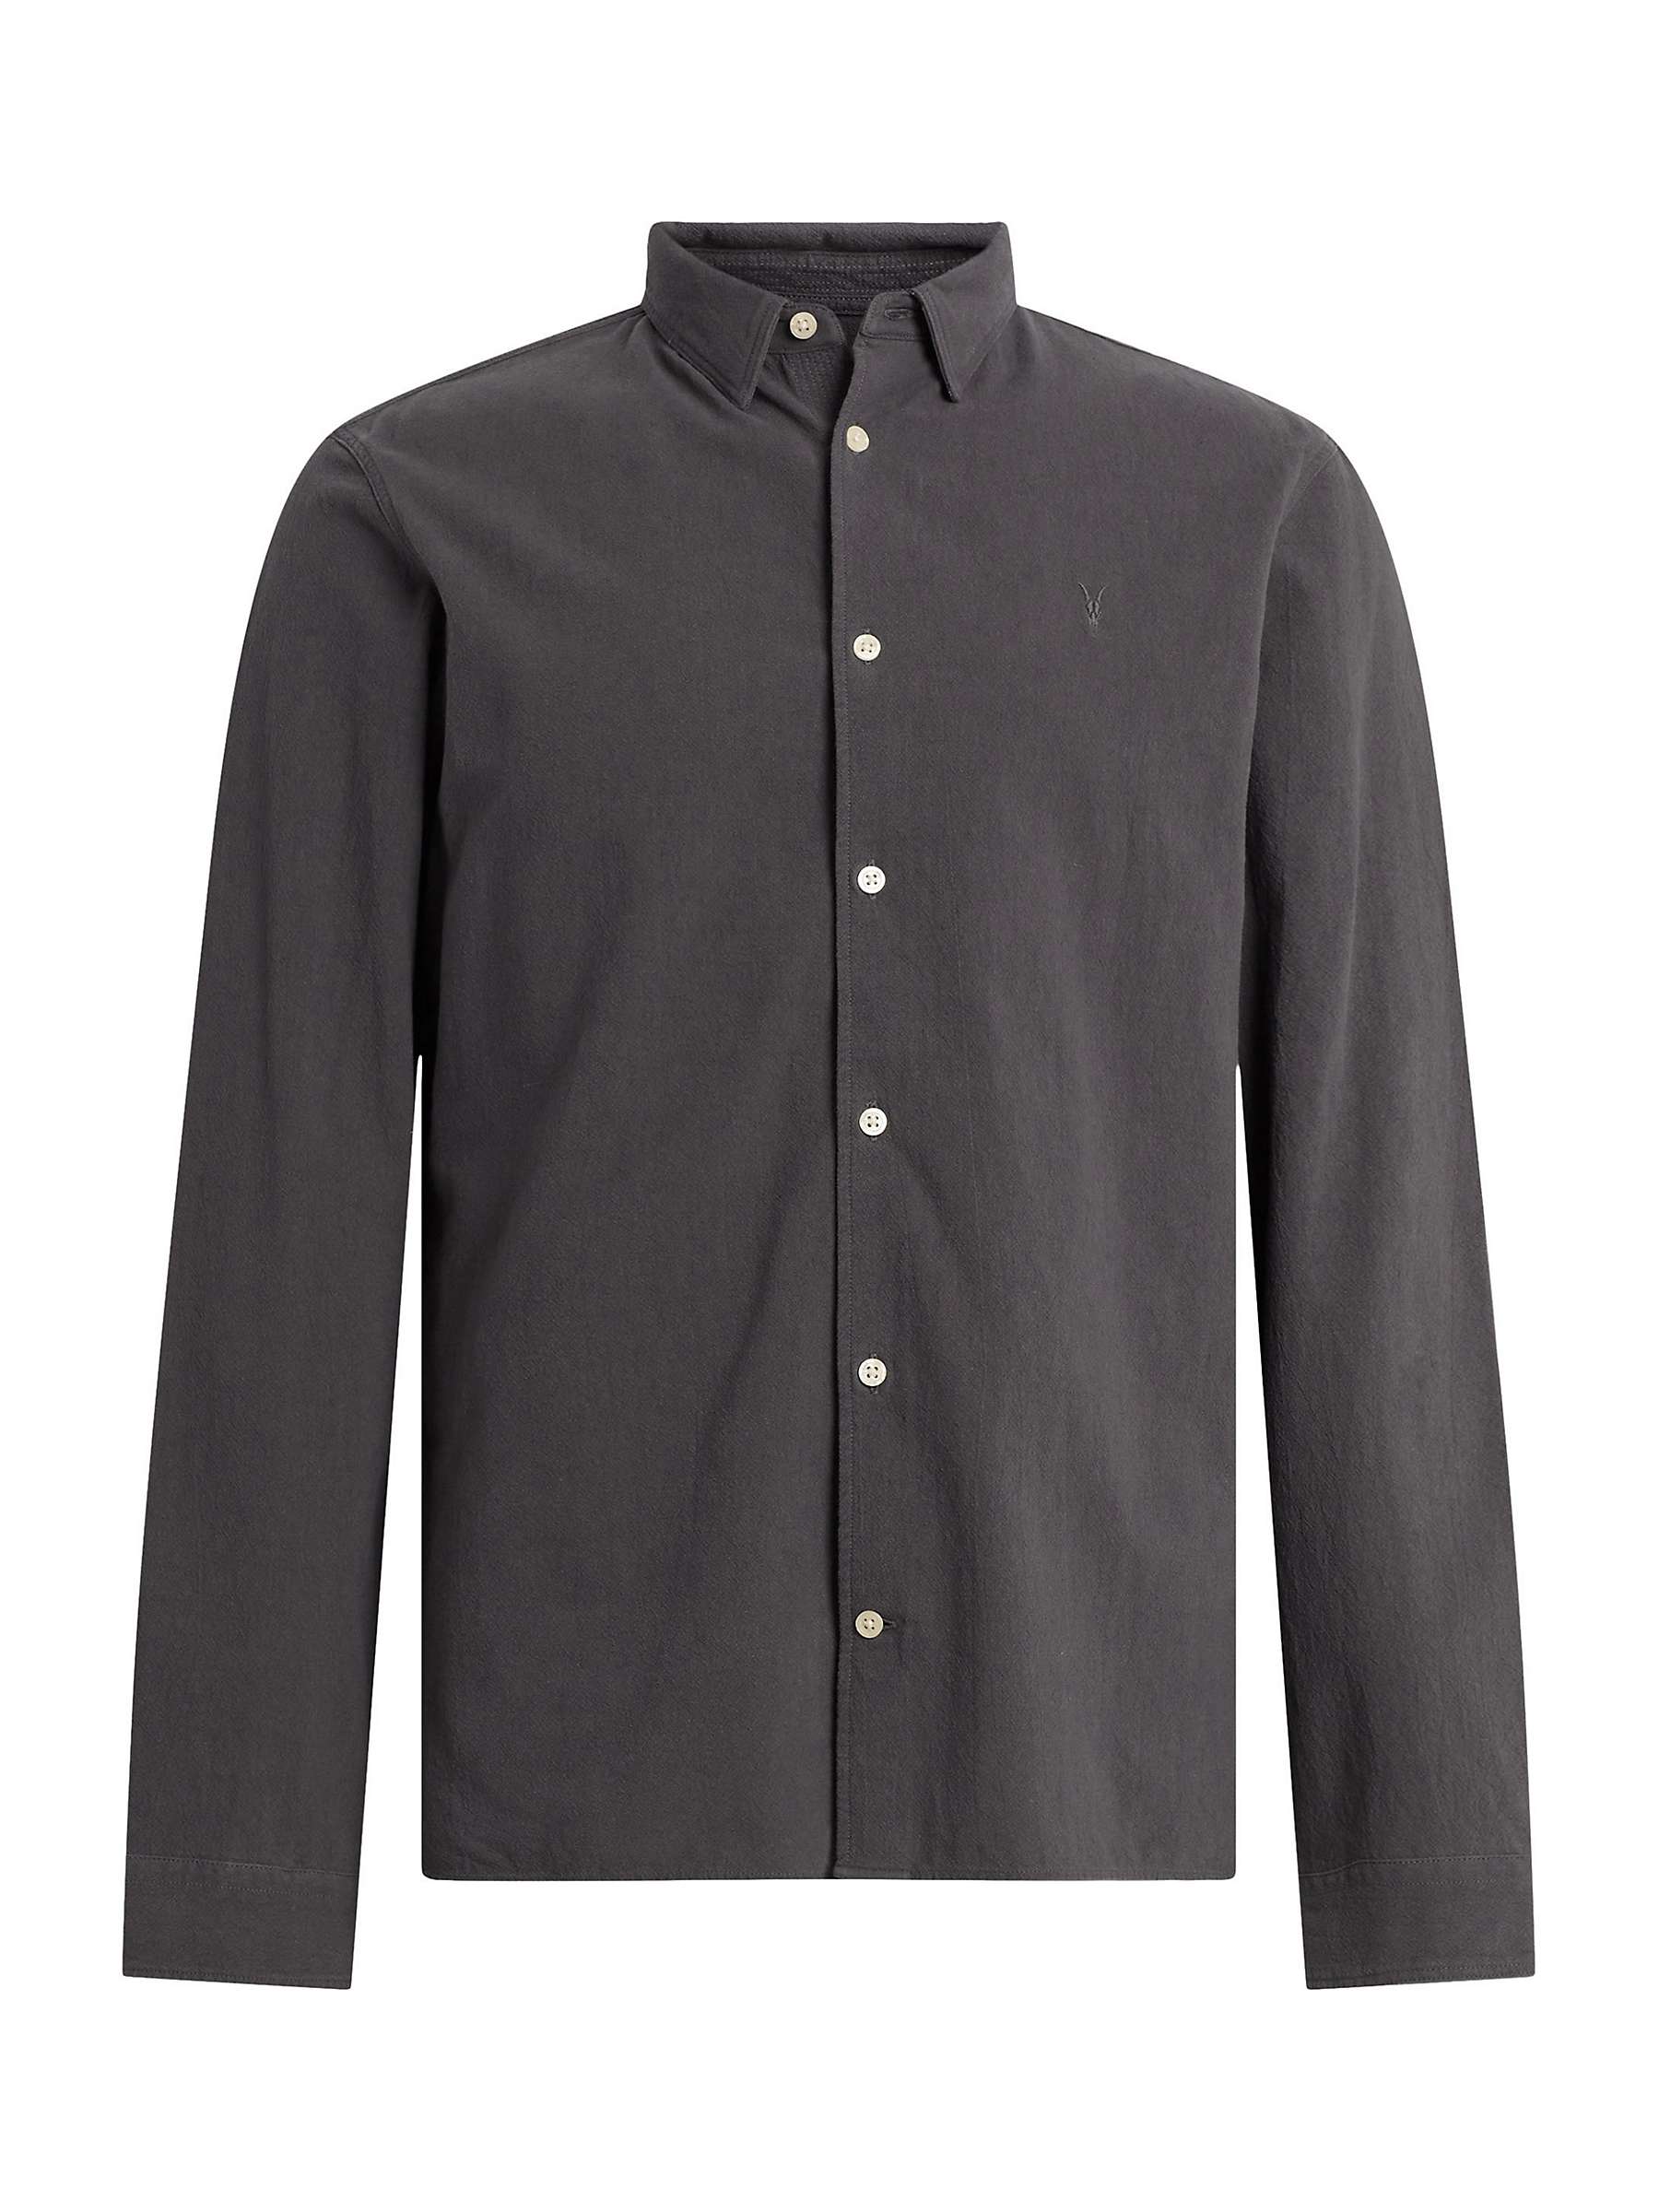 Buy AllSaints Lovell Shirt, Shaded Grey Online at johnlewis.com